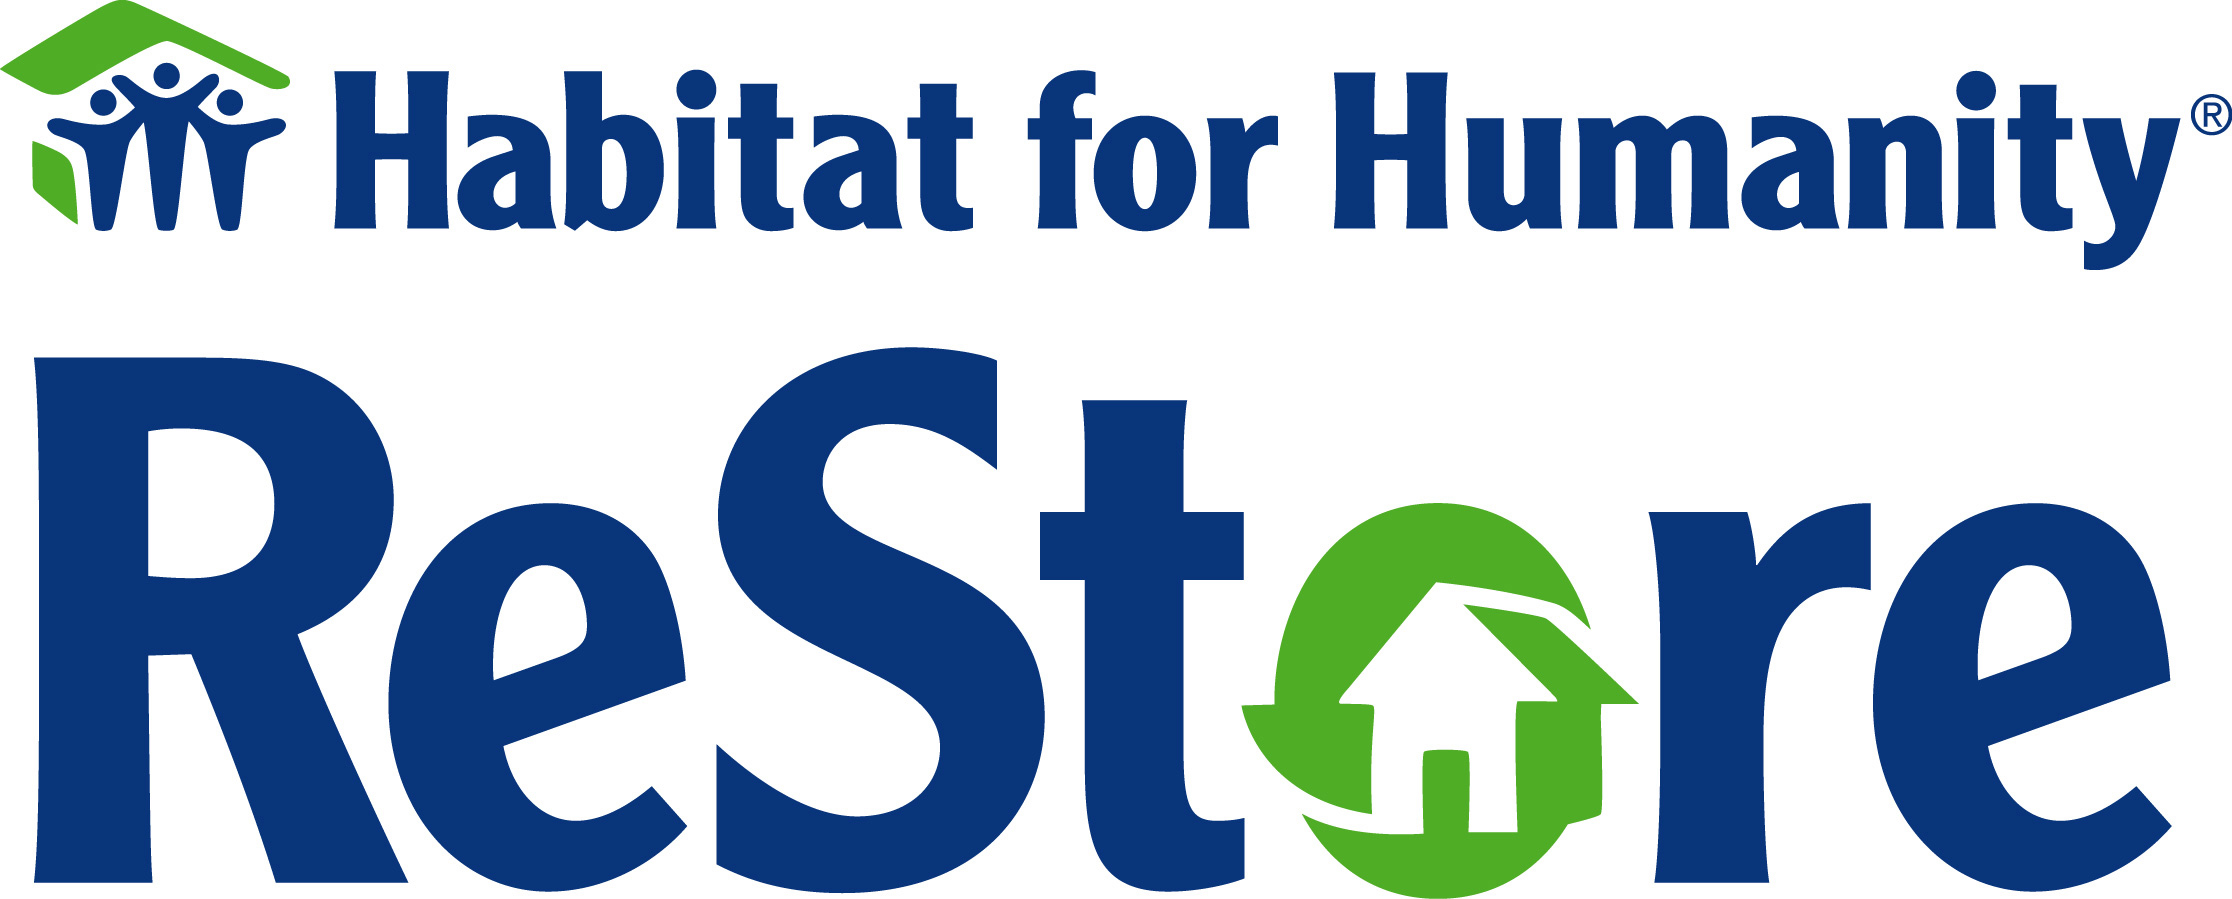 Habitat for Humanity | Restore